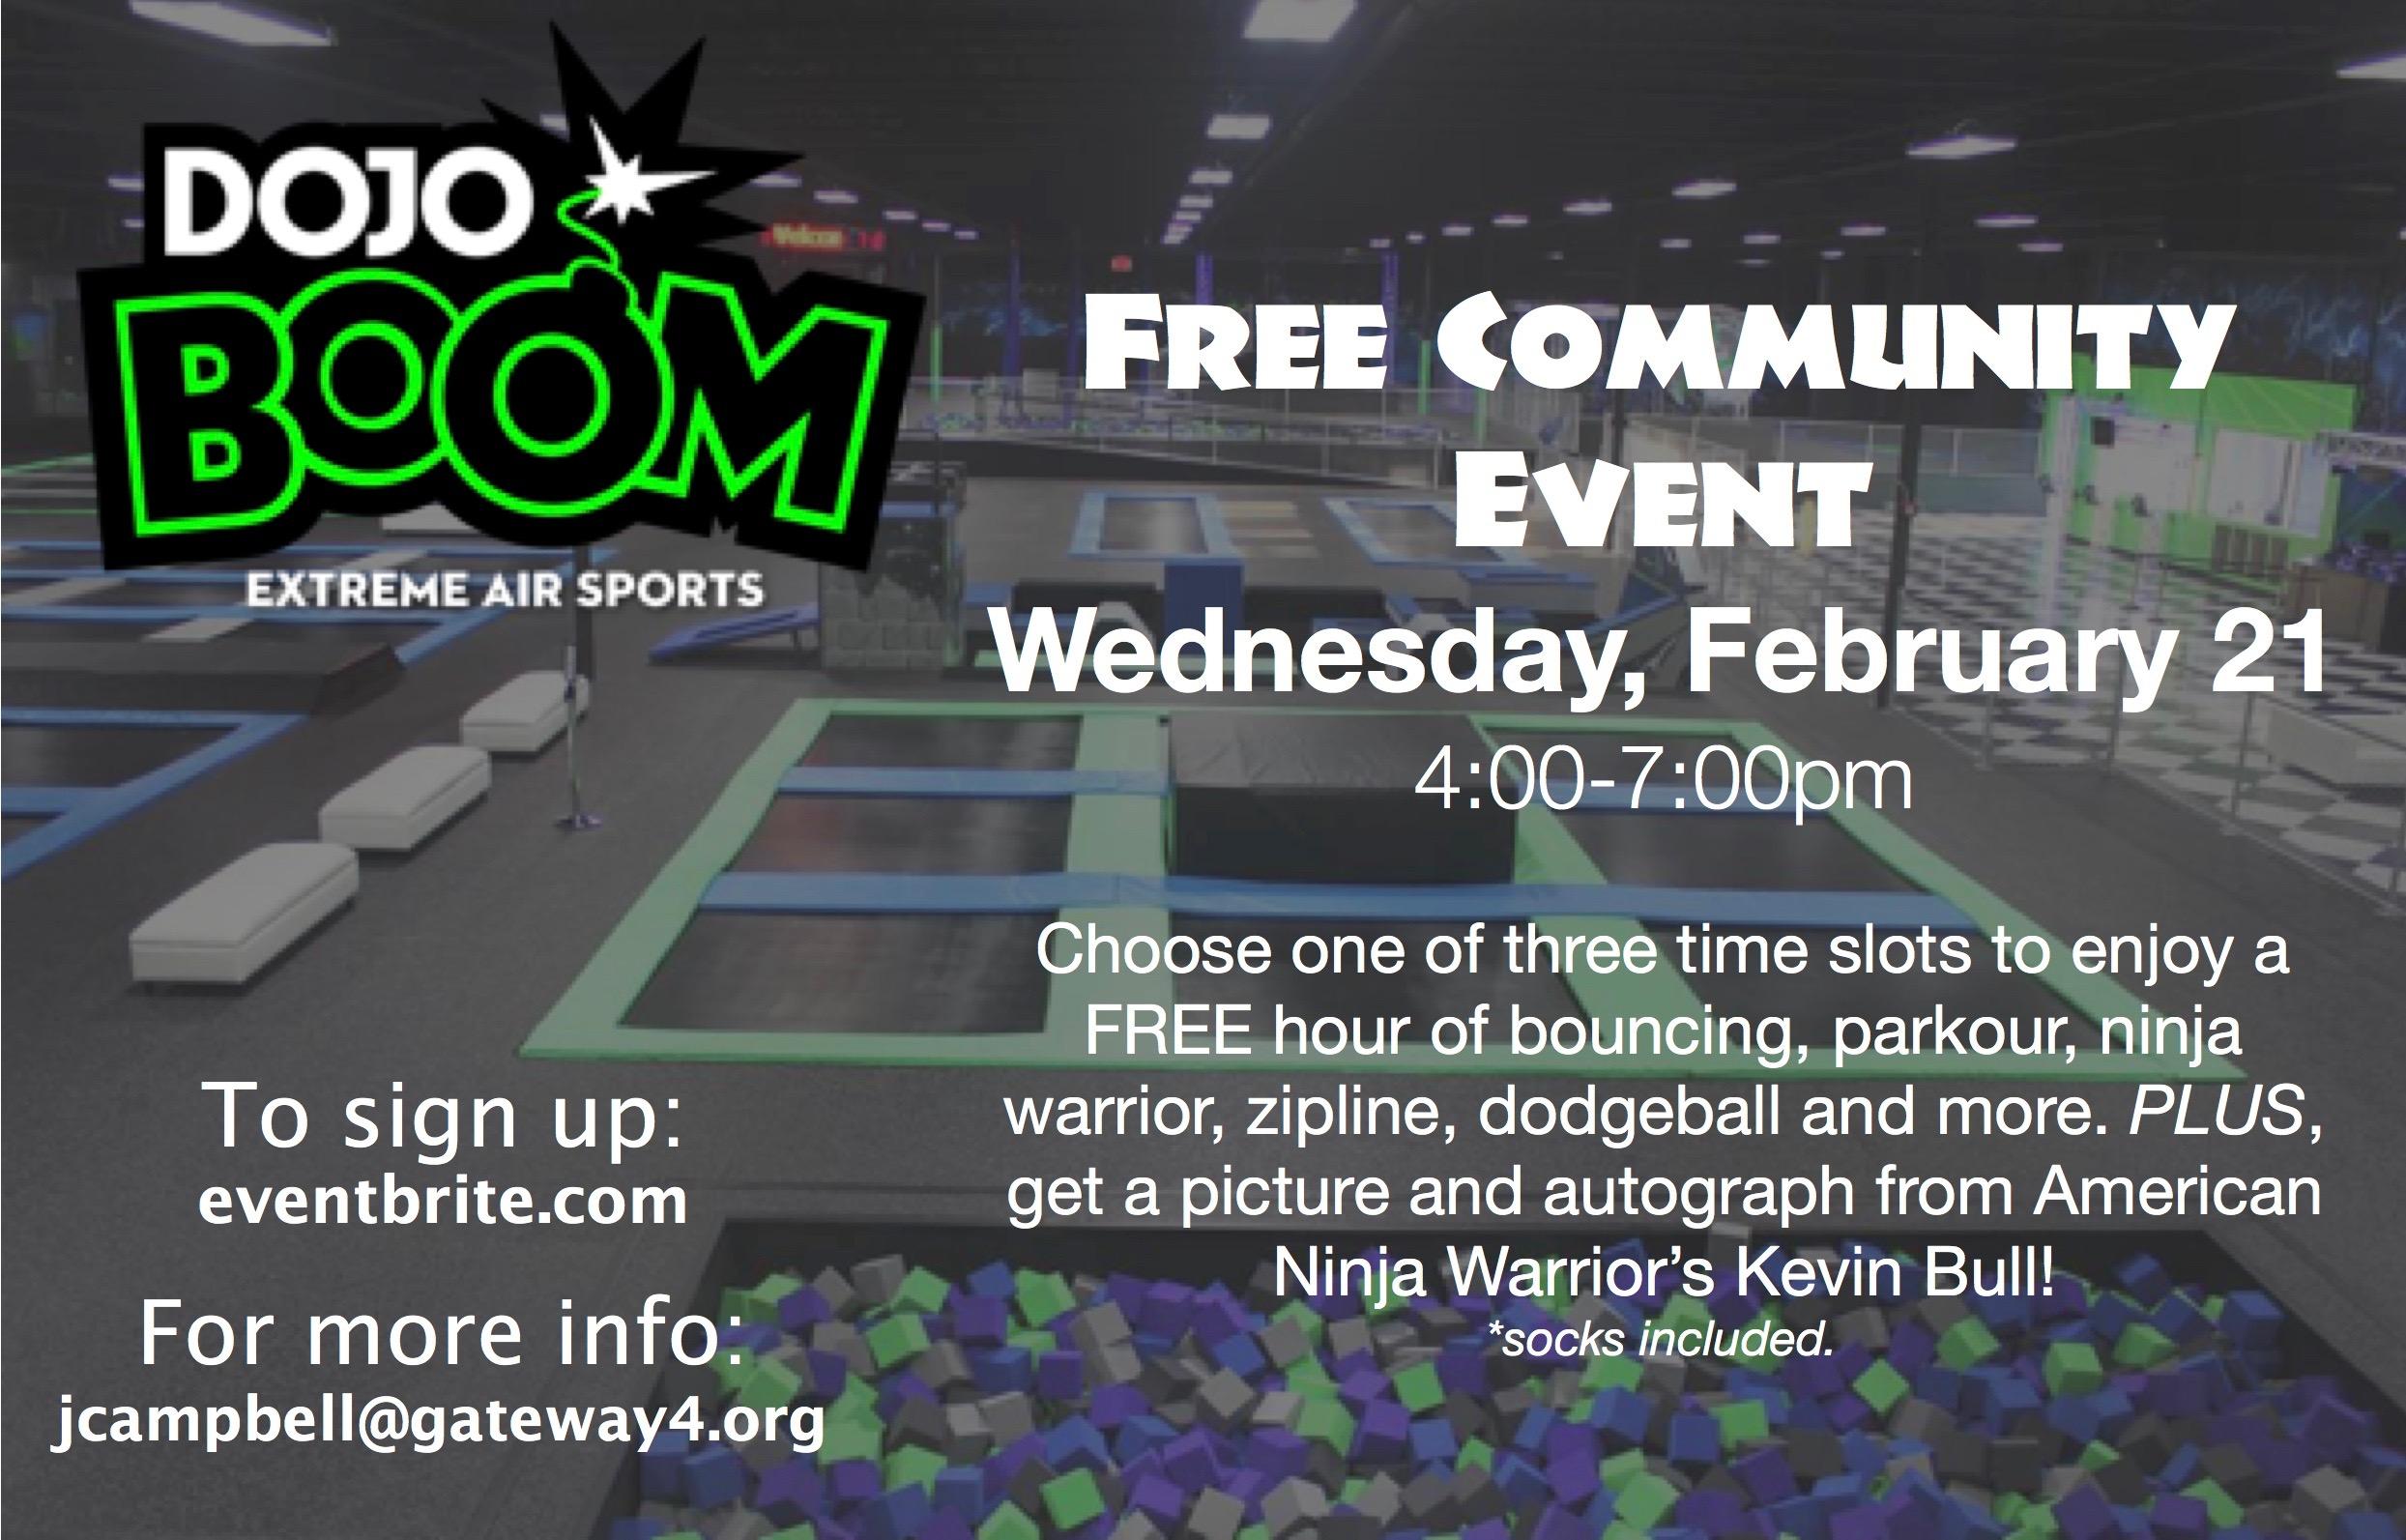 Free Community Event @ DojoBoom